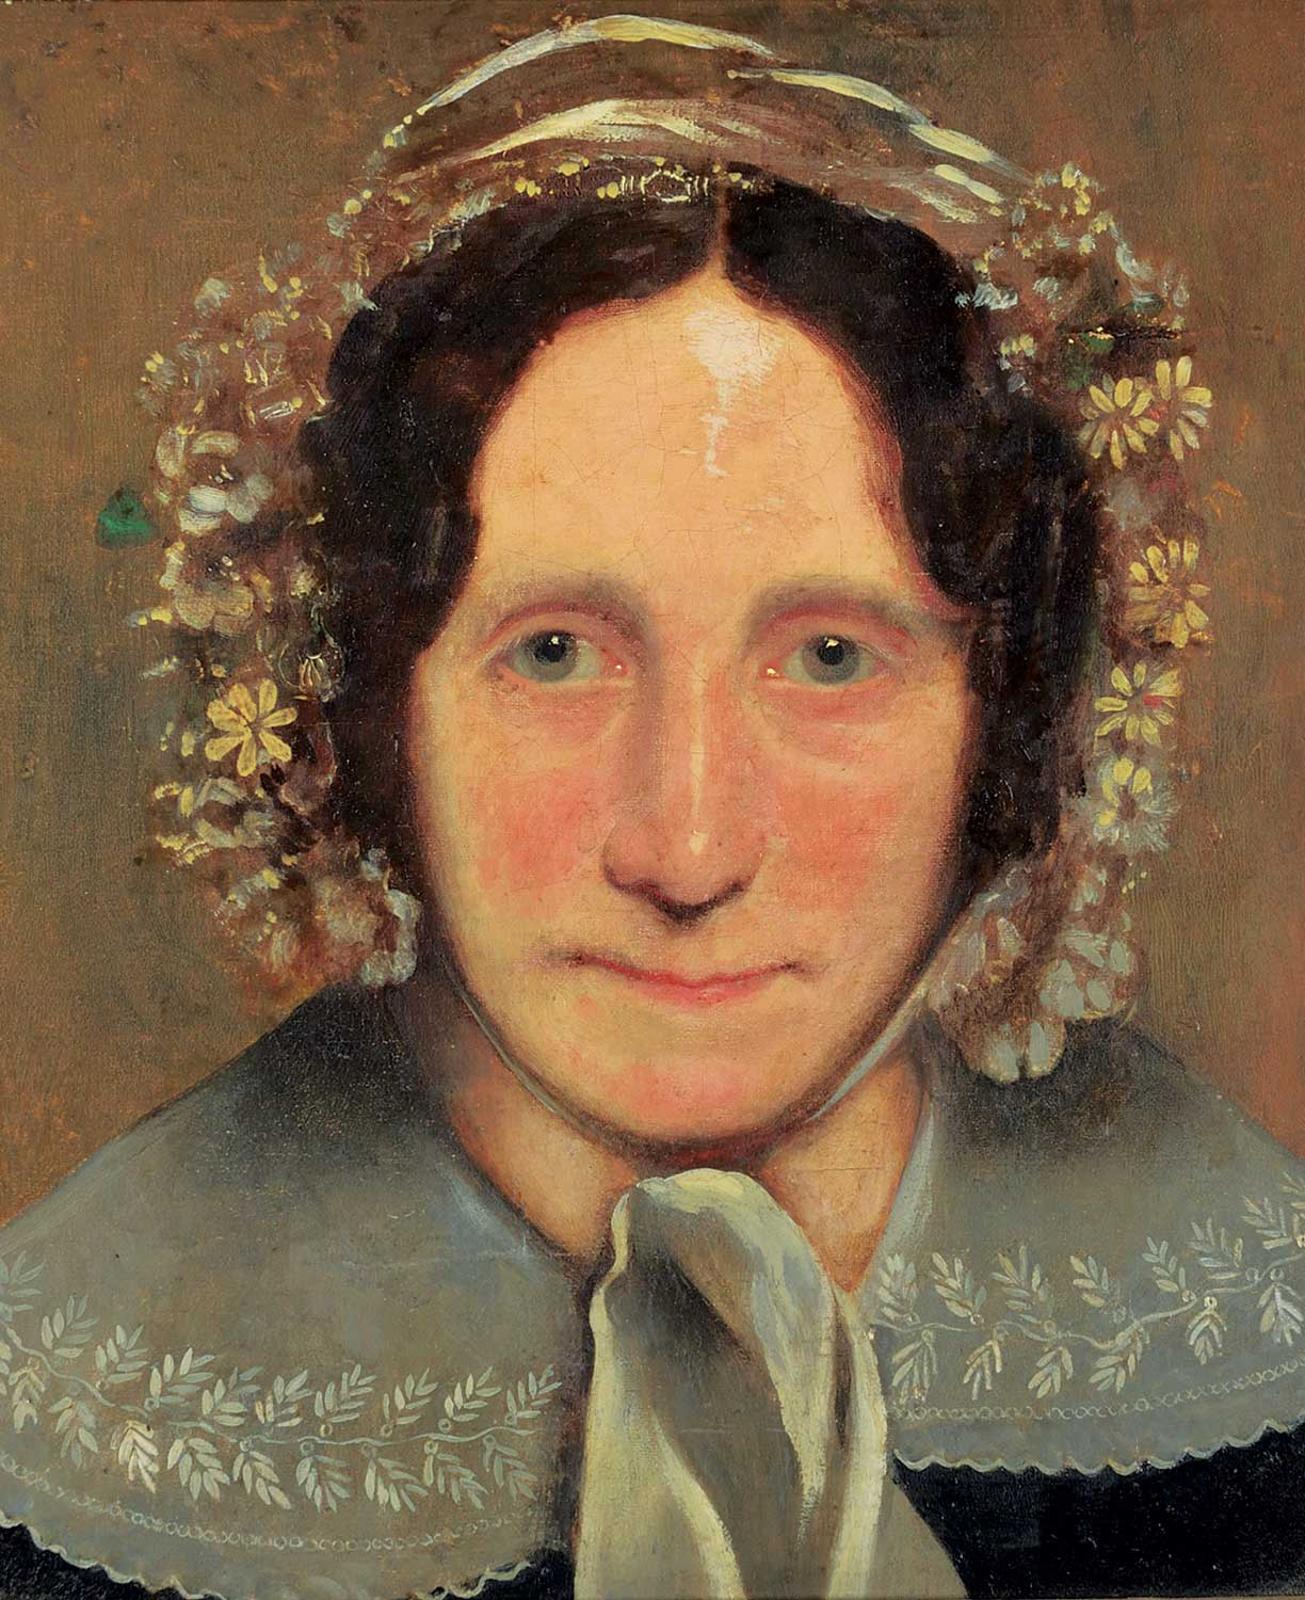 British Columbia School (1810) - Untitled - Portrait of a Woman